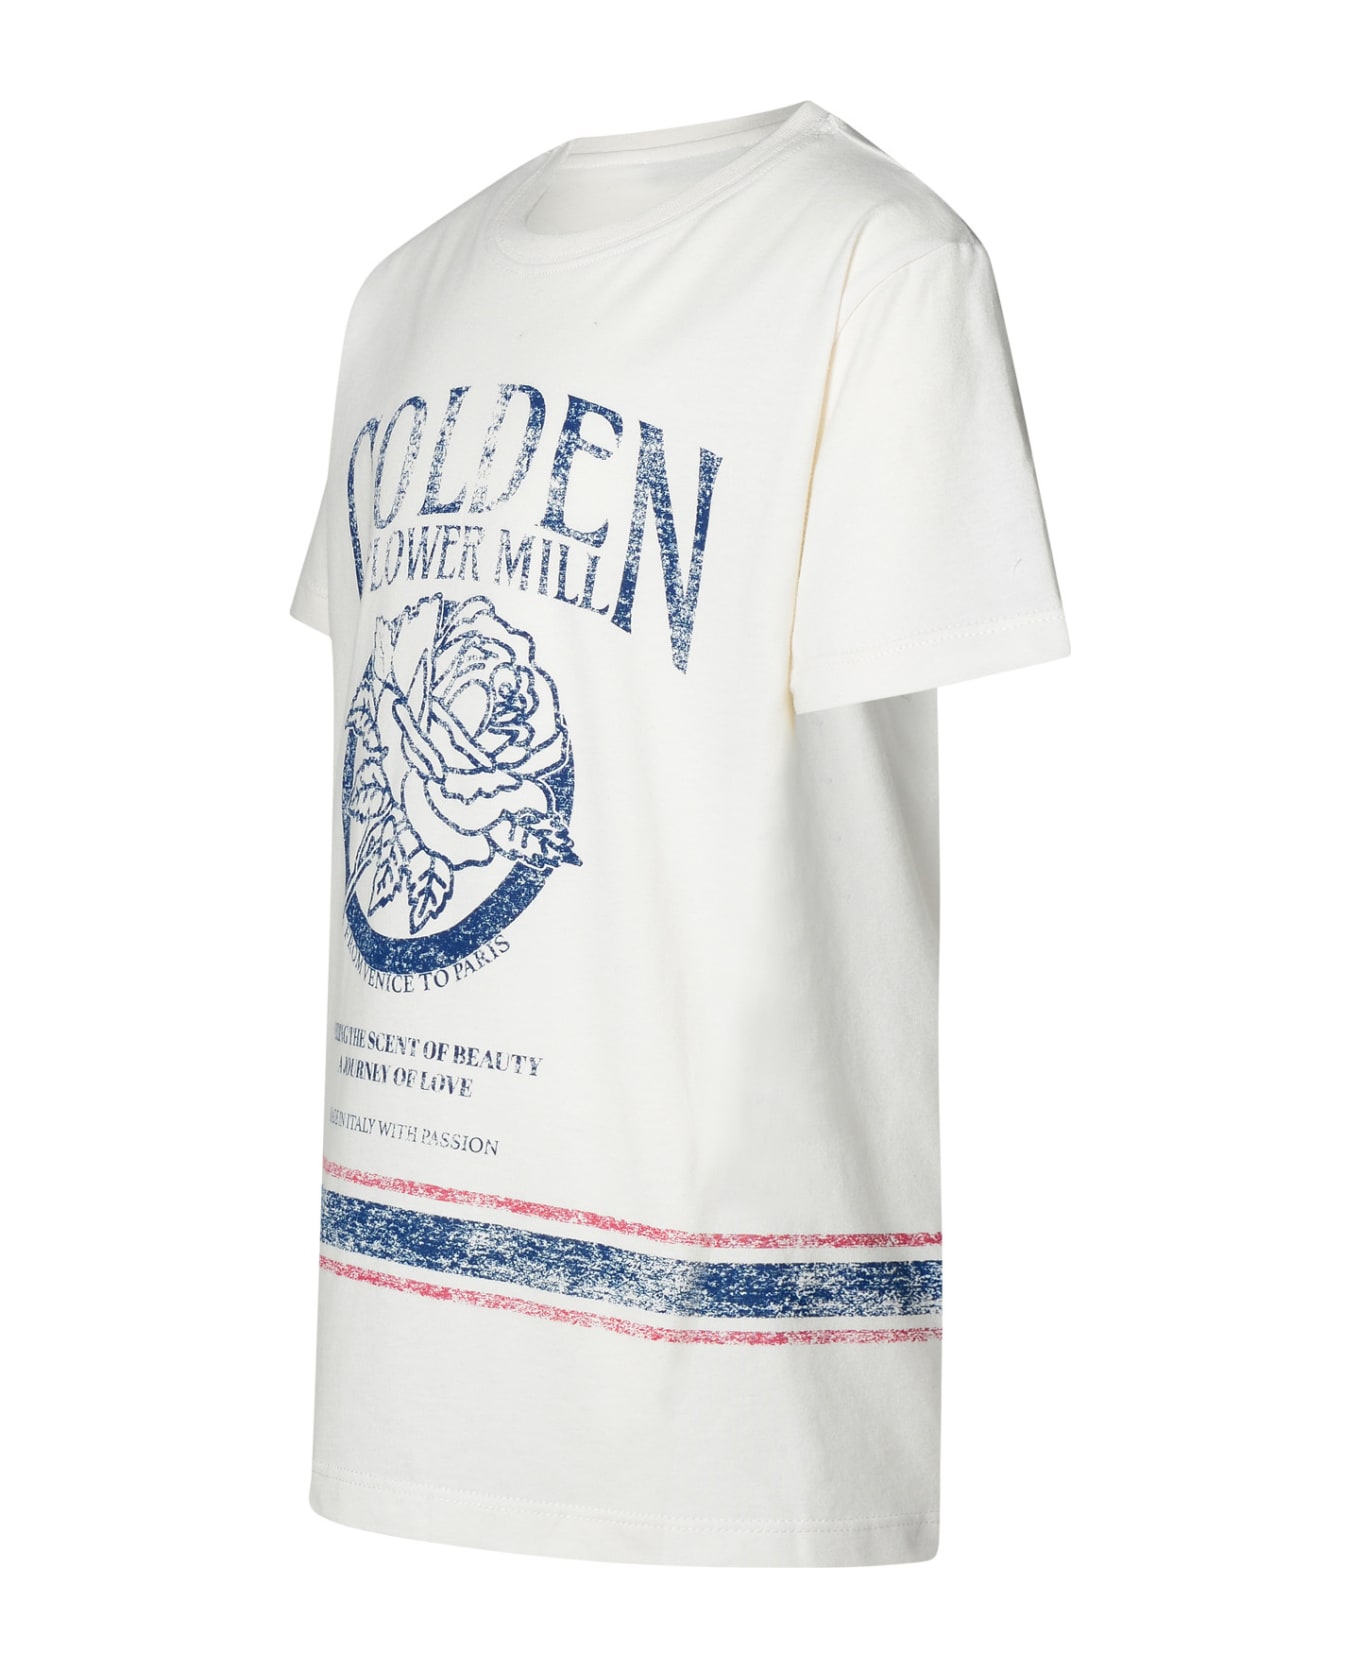 Golden Goose Ivory Cotton T-shirt - Avorio